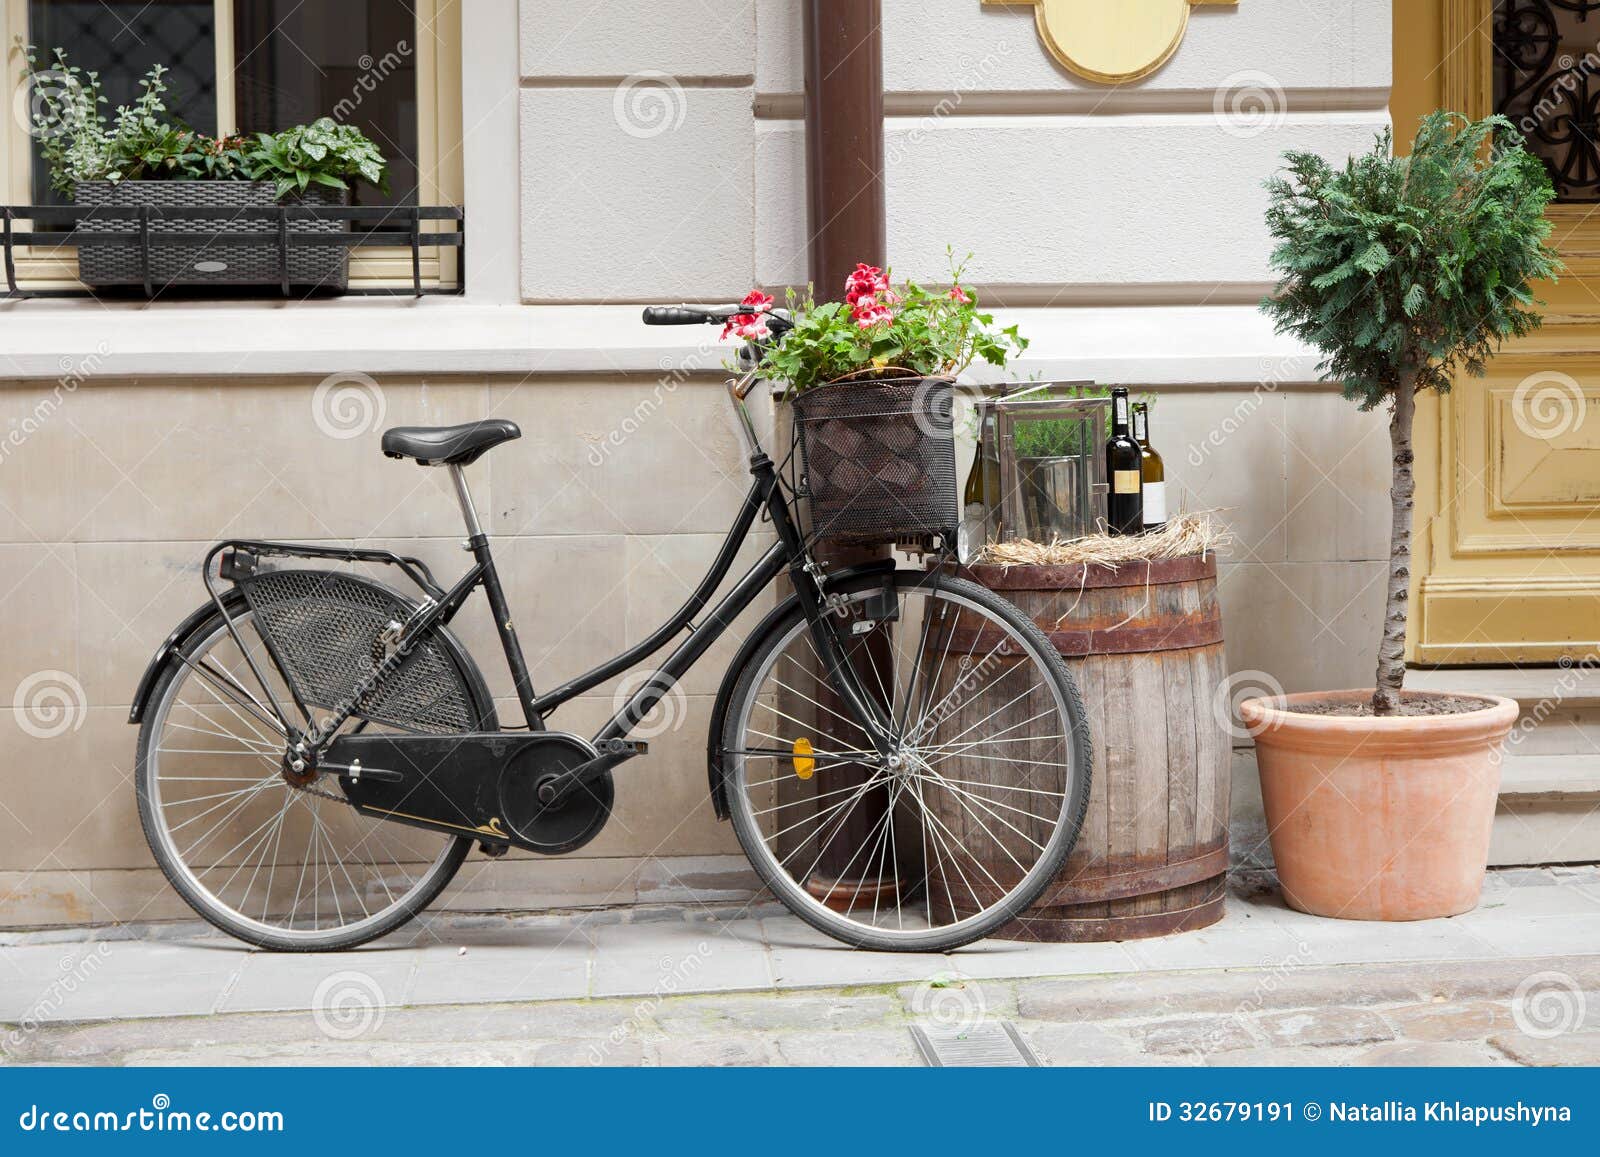 vieille bicyclette fleurie